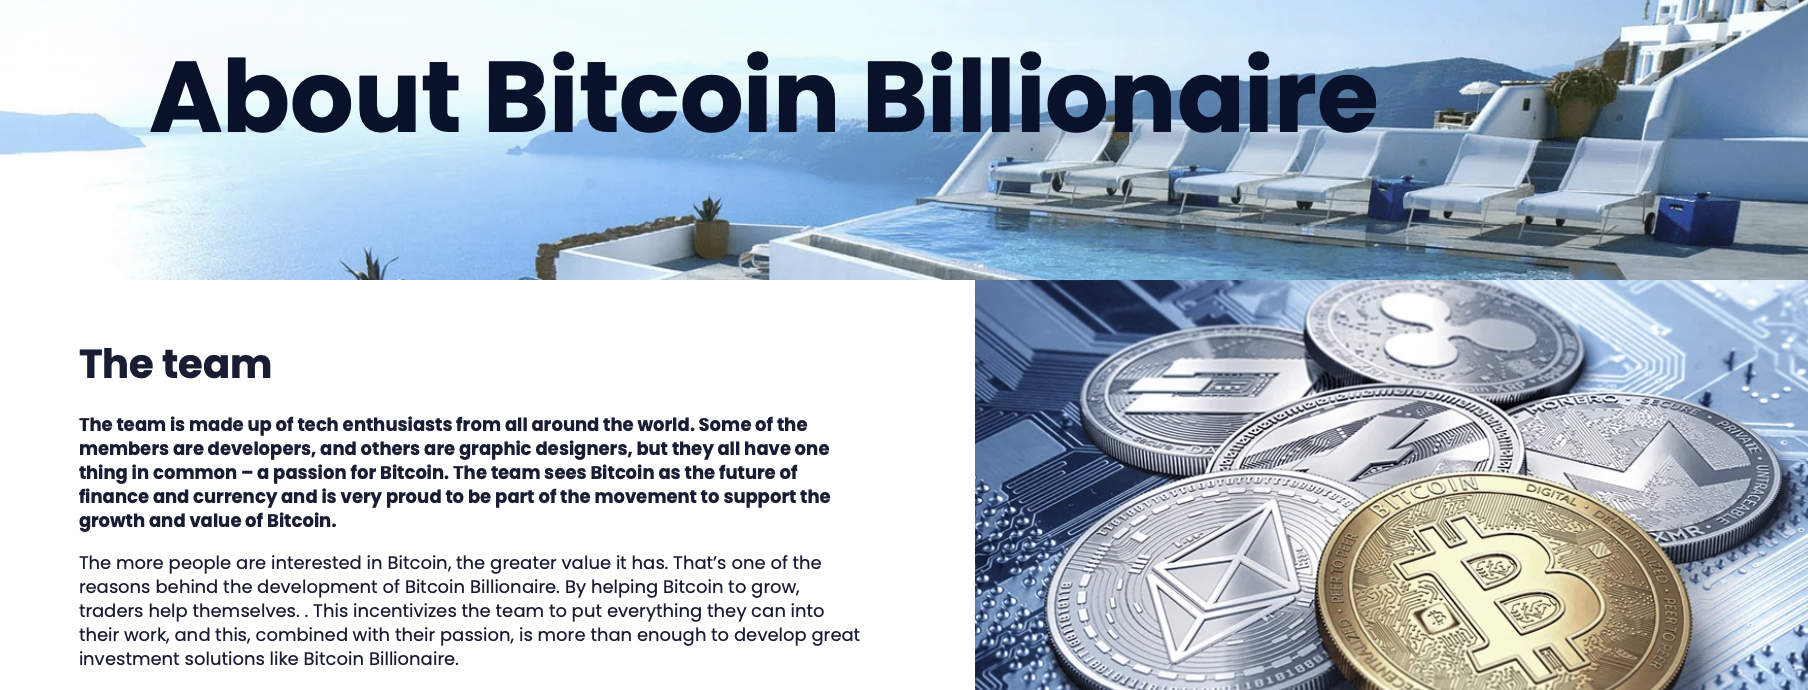 Informace o týmu bitcoinového miliardáře